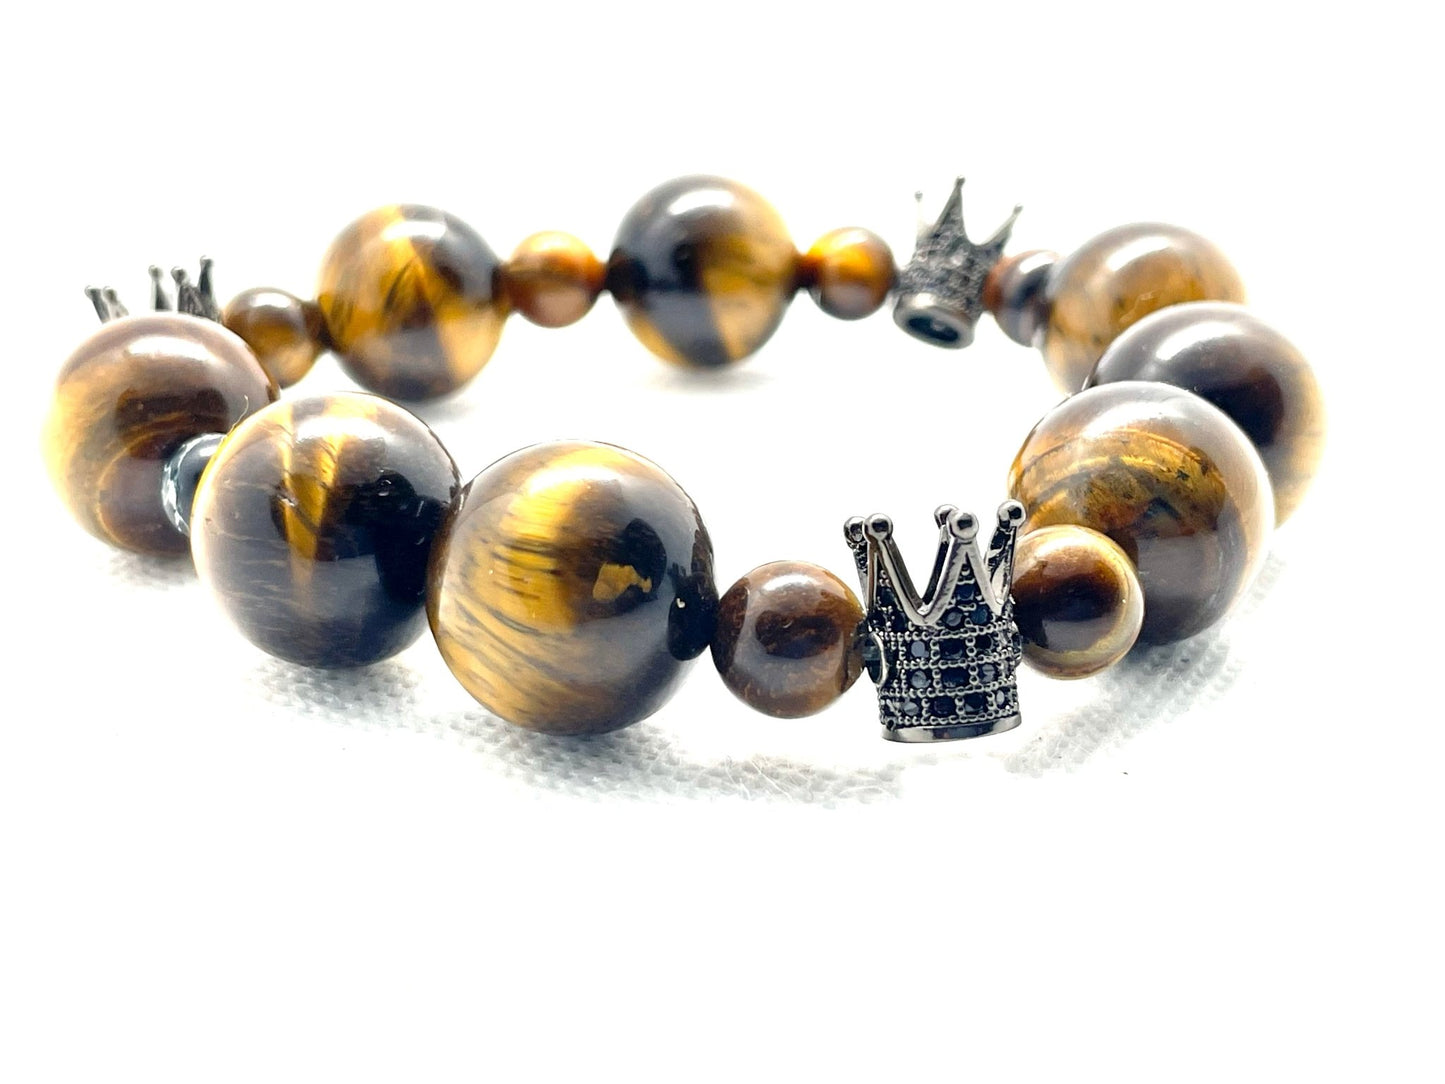 Triple Crown Triumph: Tiger's Eye Bracelet with Regal Symbolism - Organicmansion.com